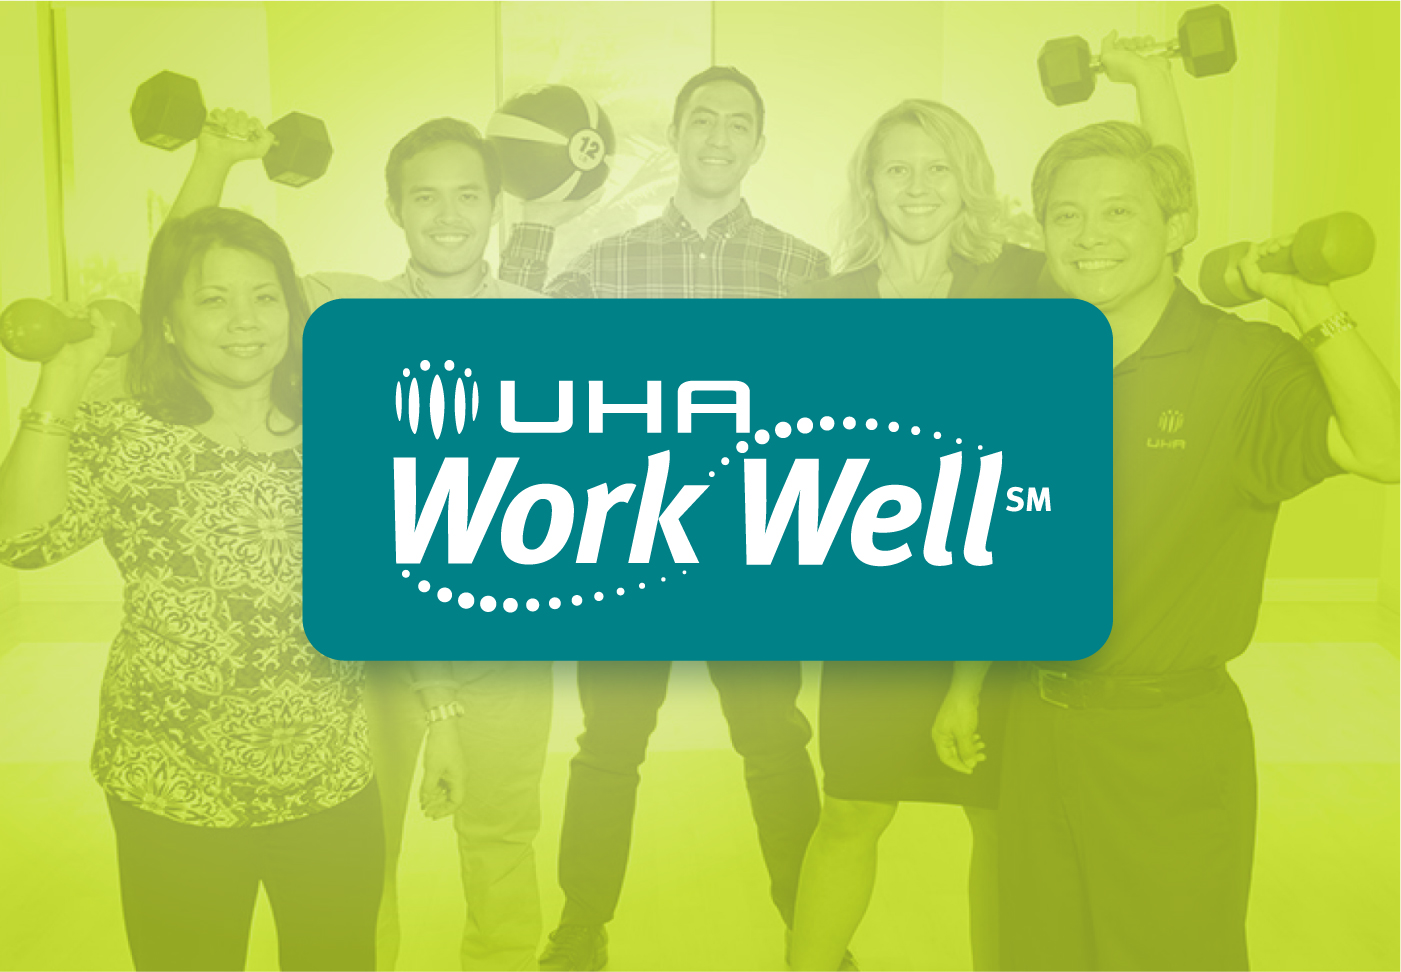 About UHA Work Well - UHA Health